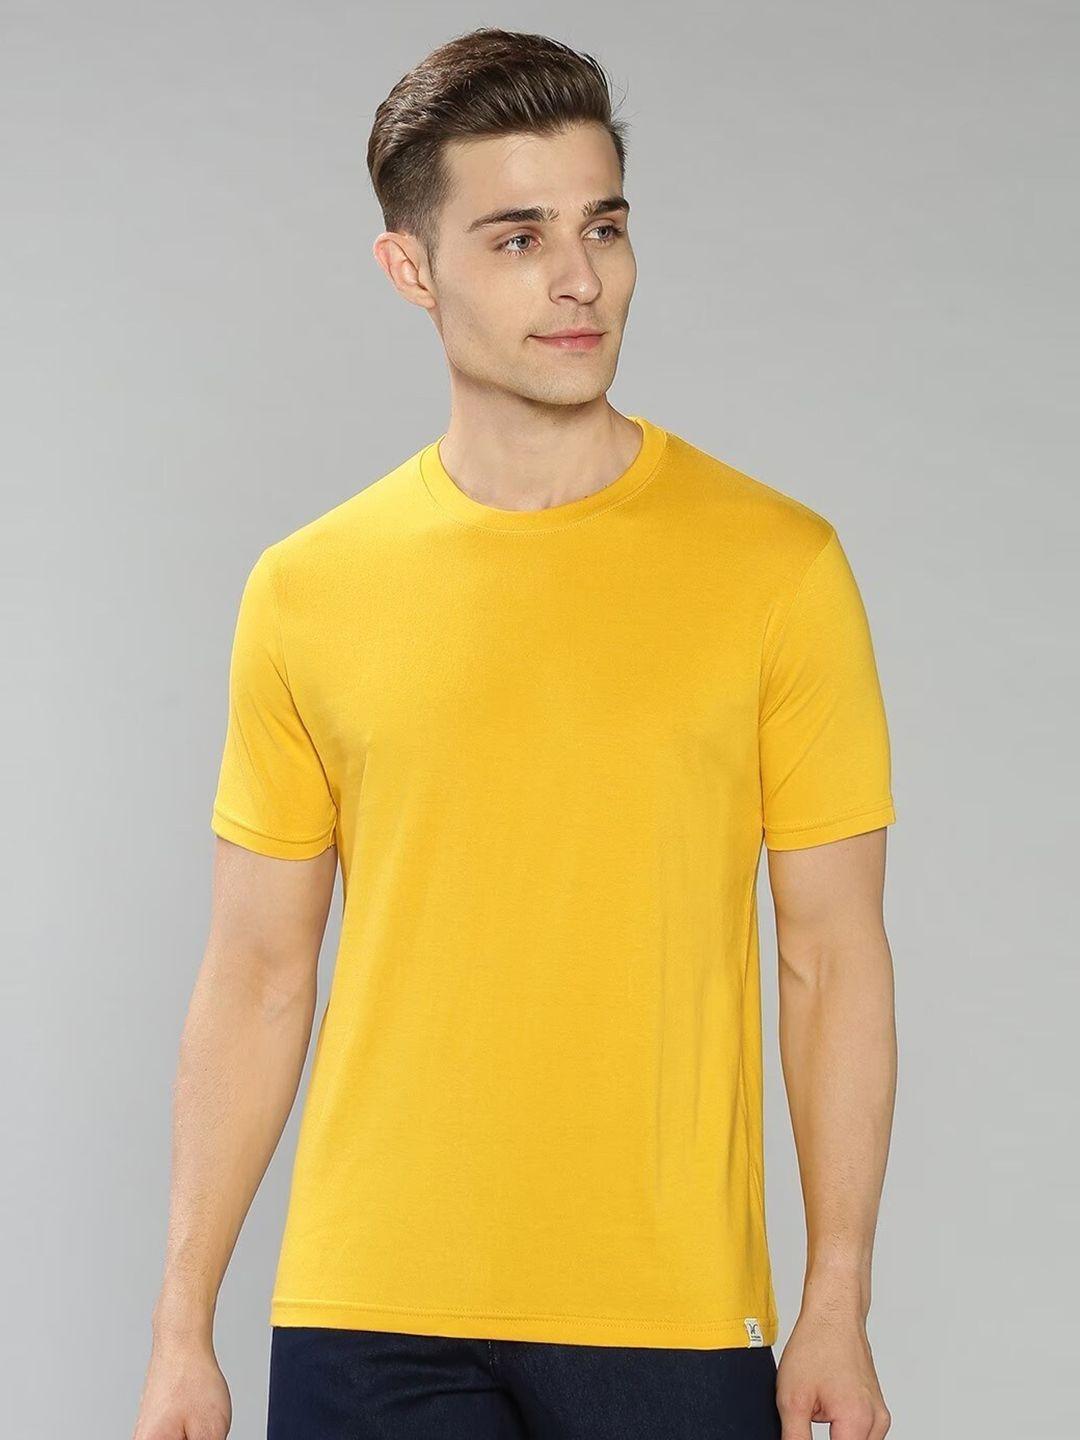 the hollander round neck pure cotton t-shirt